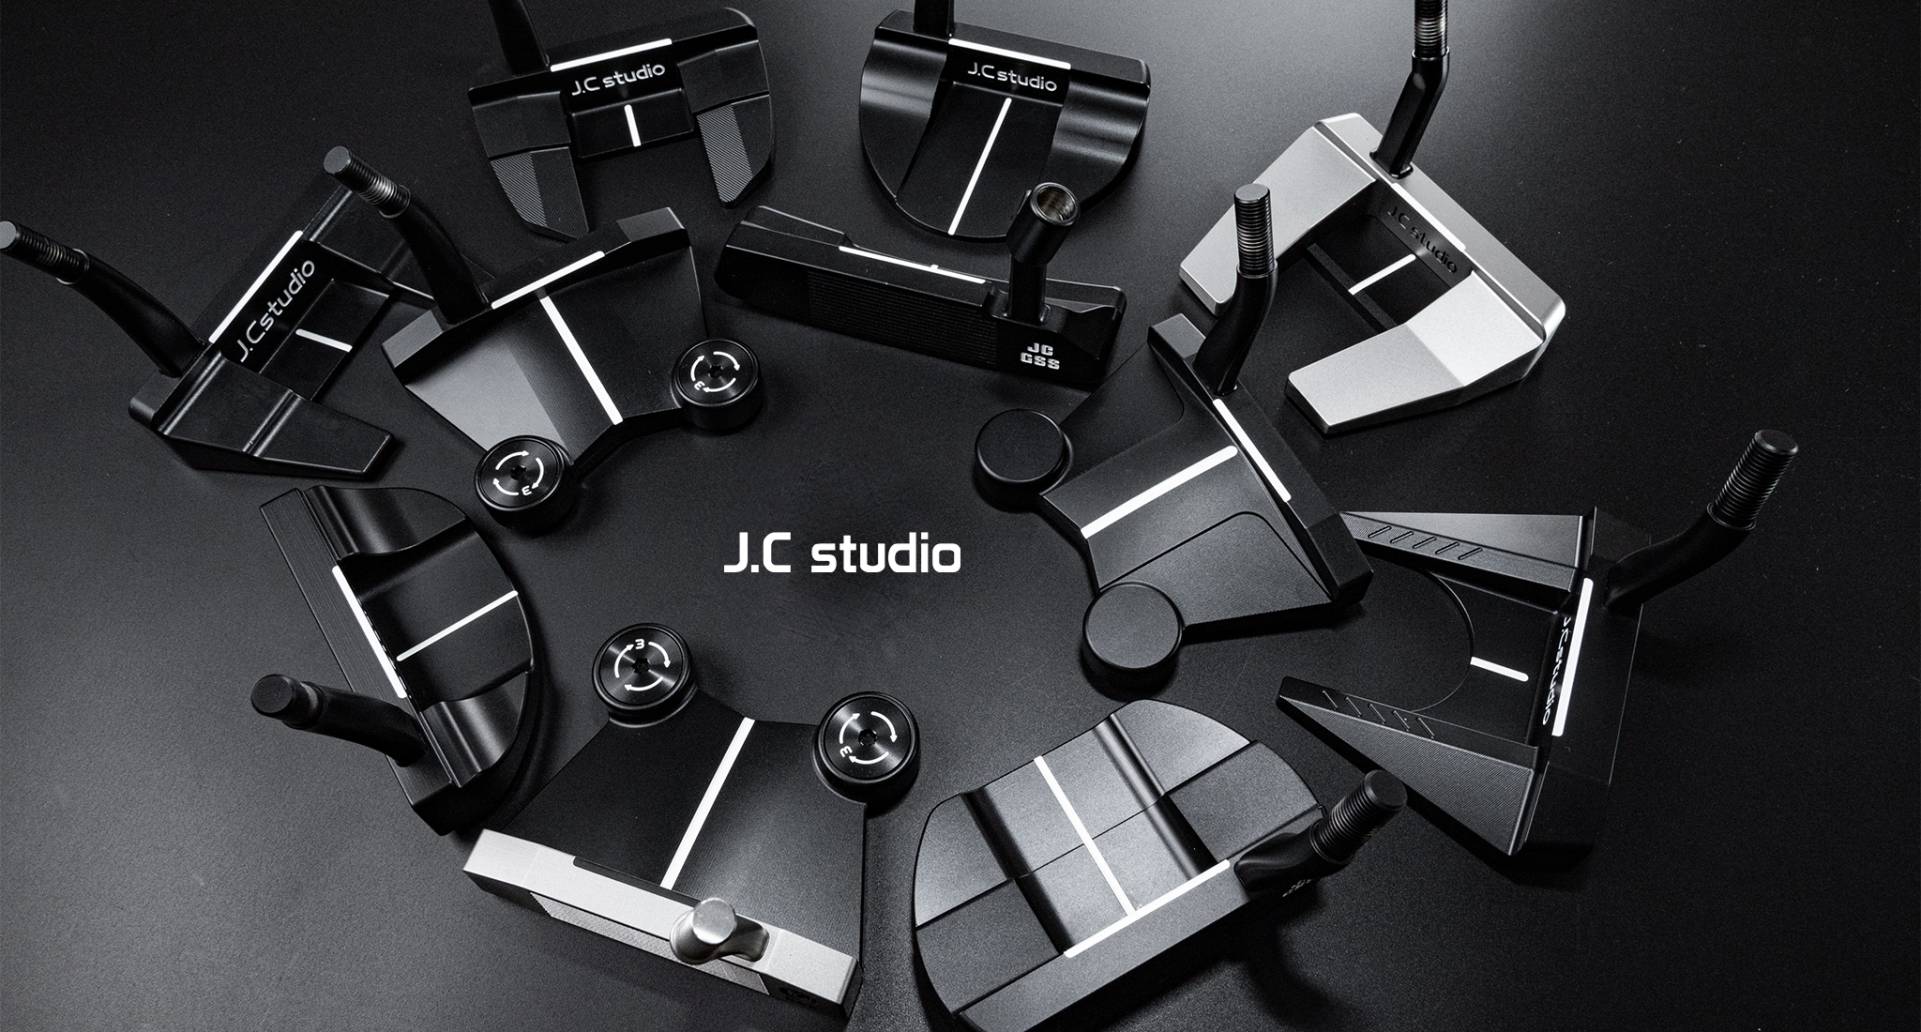 J.C studio